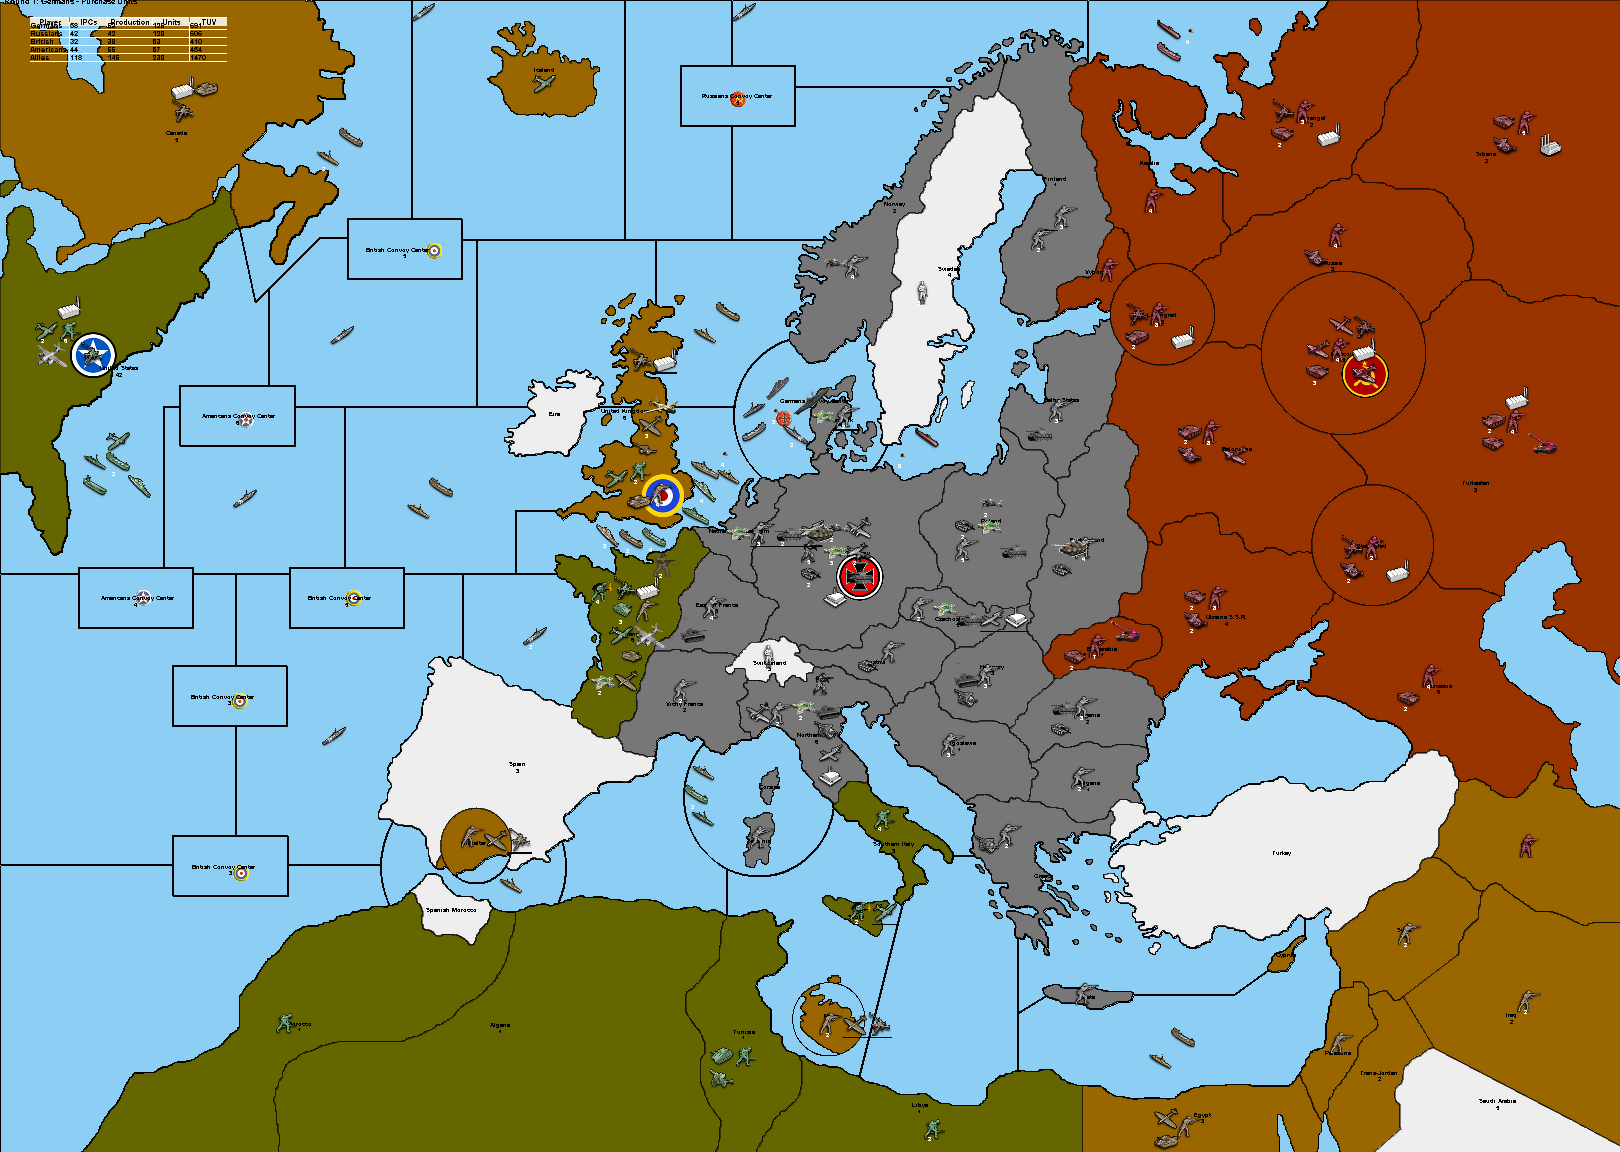 Axis & Allies: Europe - Wikipedia